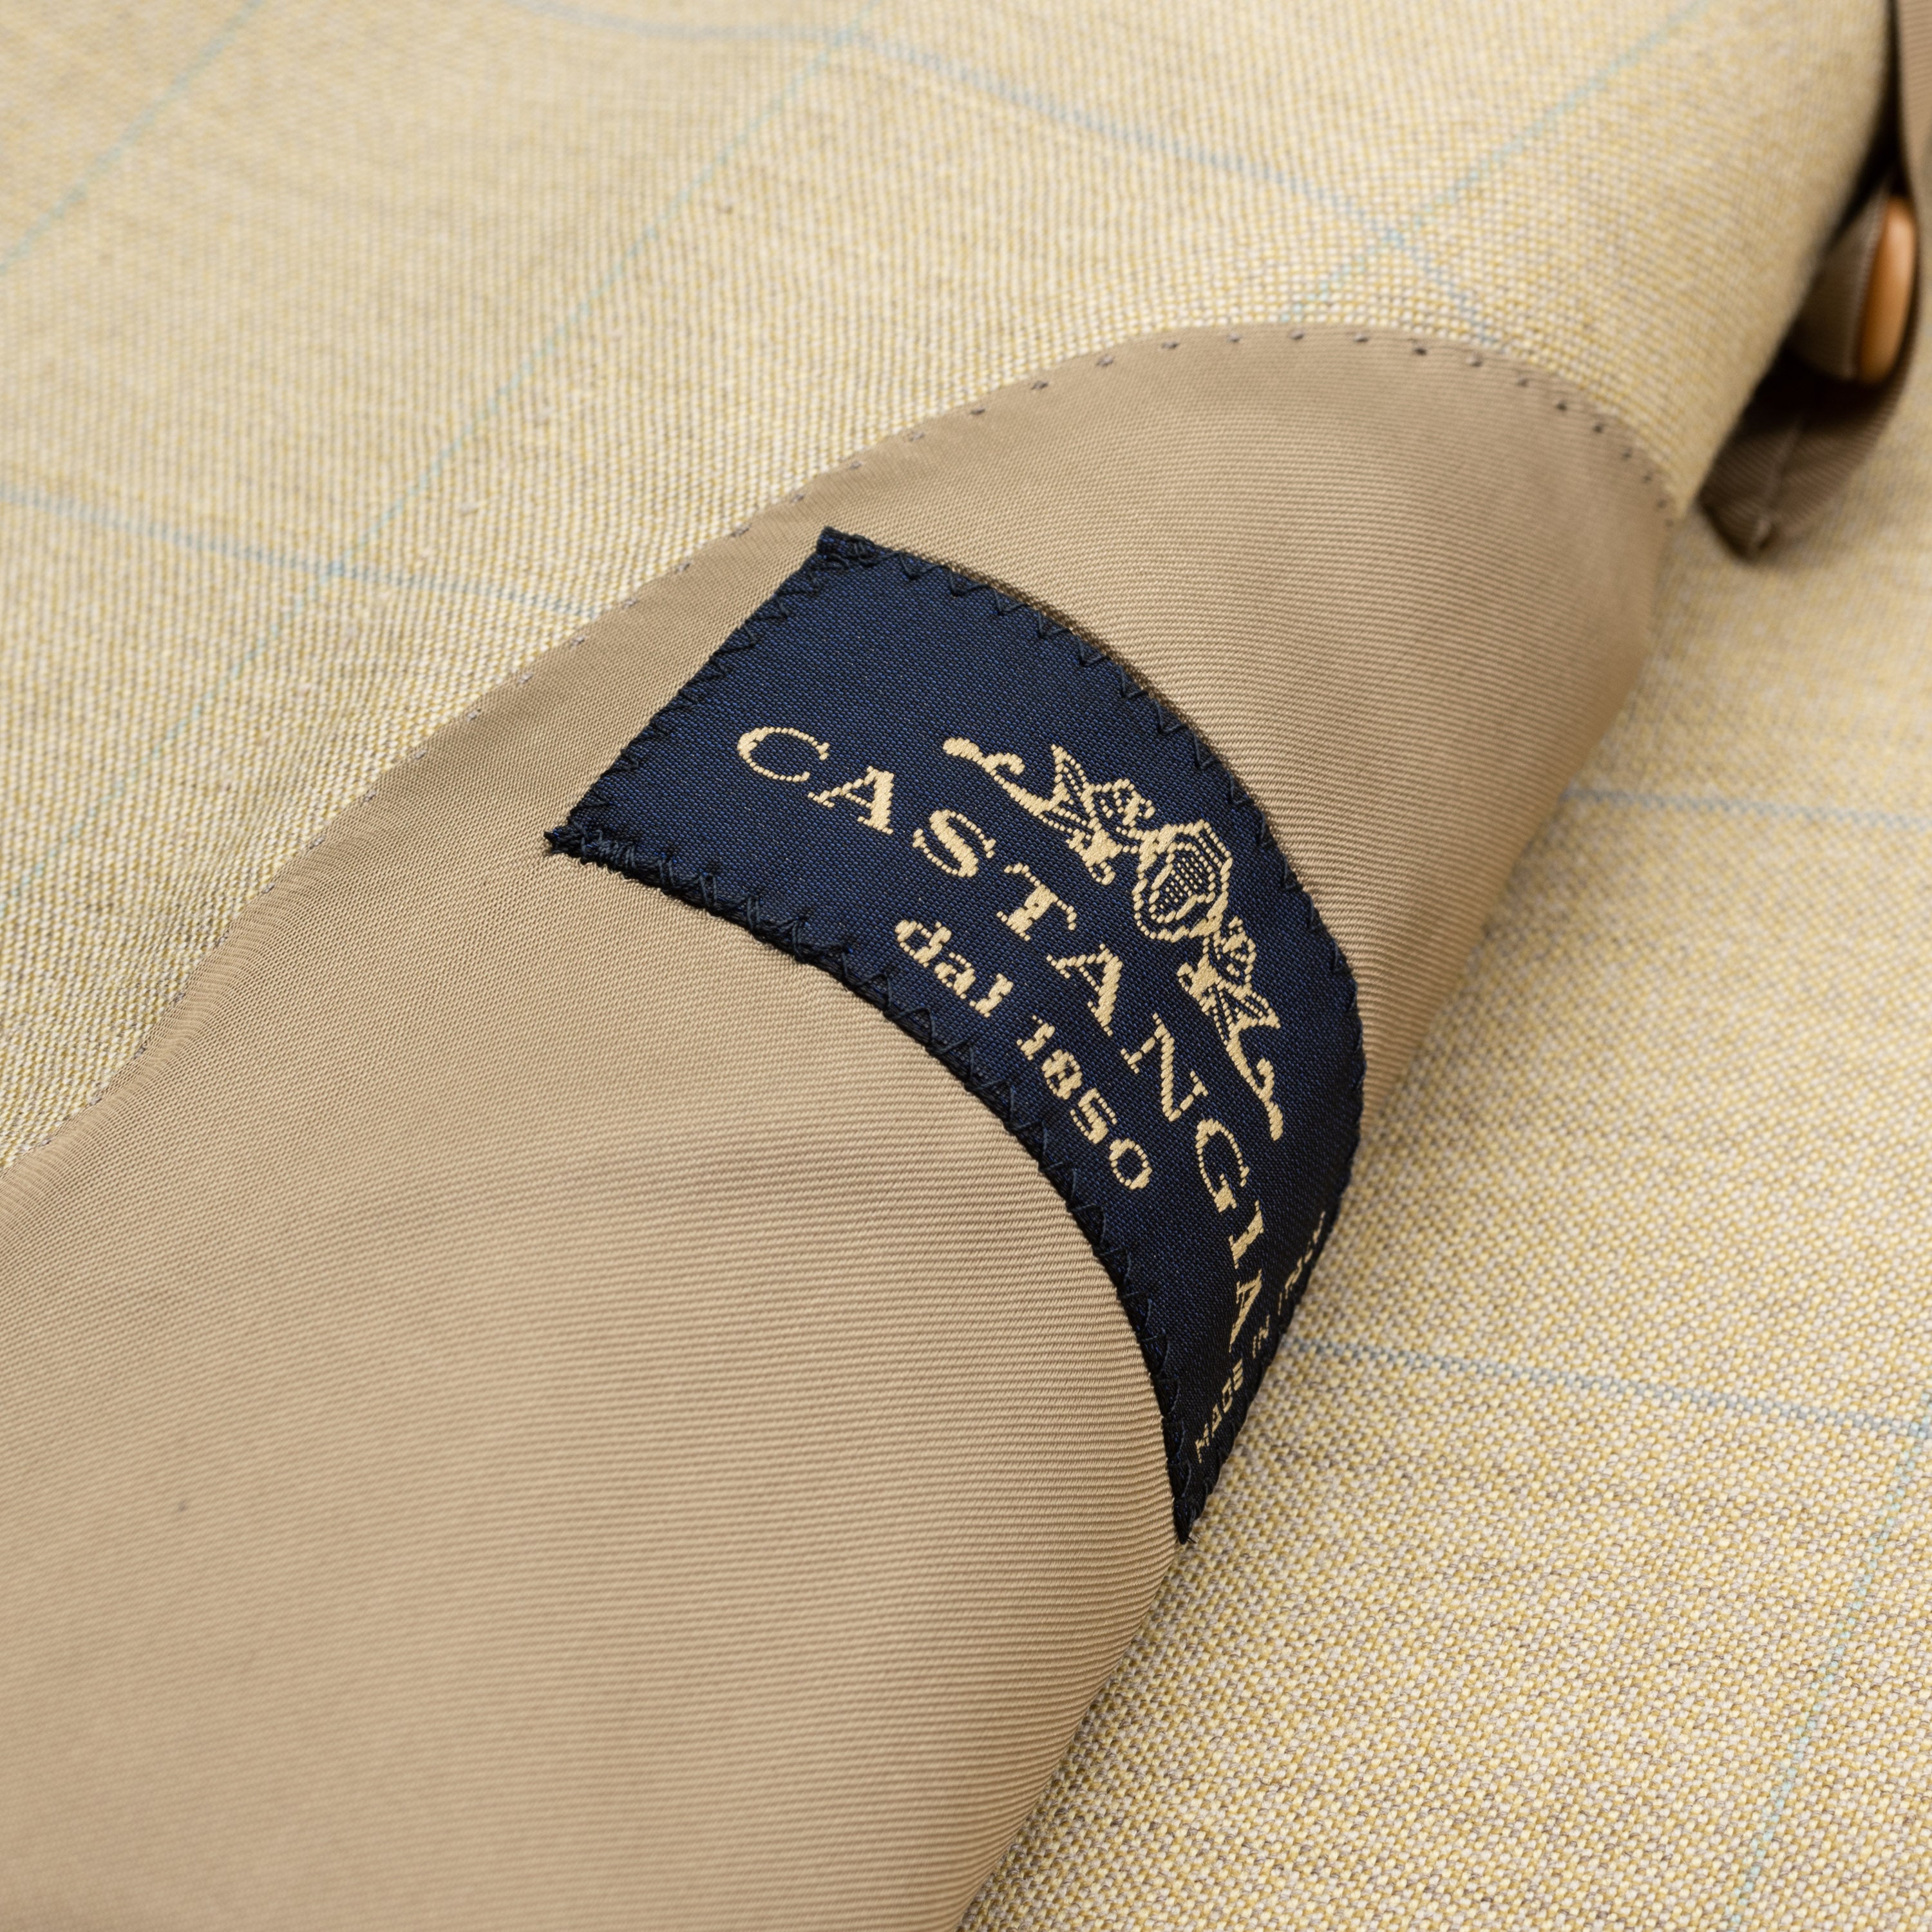 CASTANGIA Tan Windowpane Australian Merino Wool Super 100's Jacket 48 NEW 38 CASTANGIA